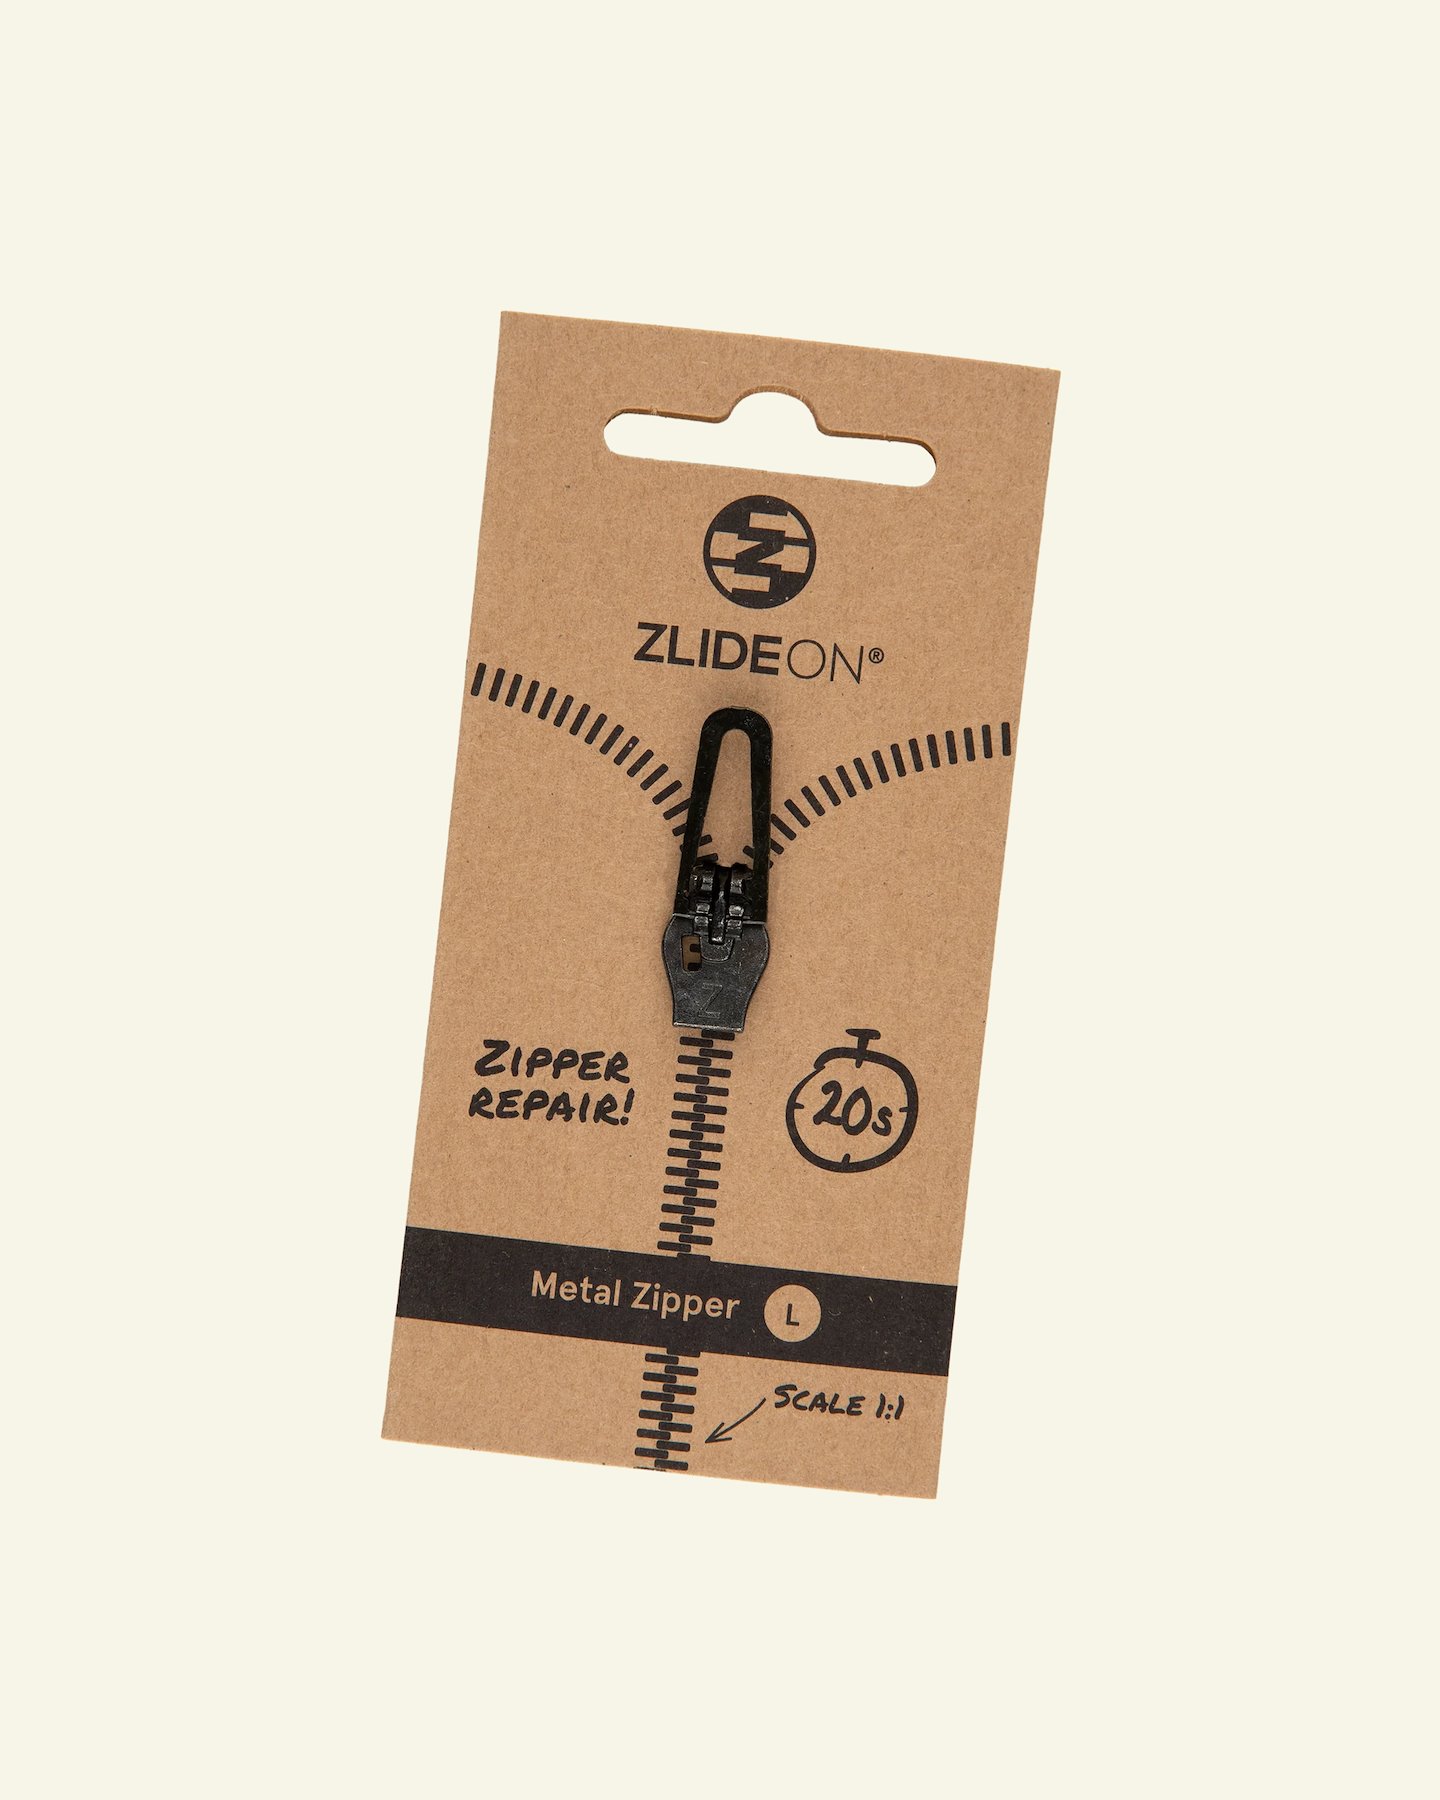 ZlideOn for metal zipper L black 1pc x40625_pack.png